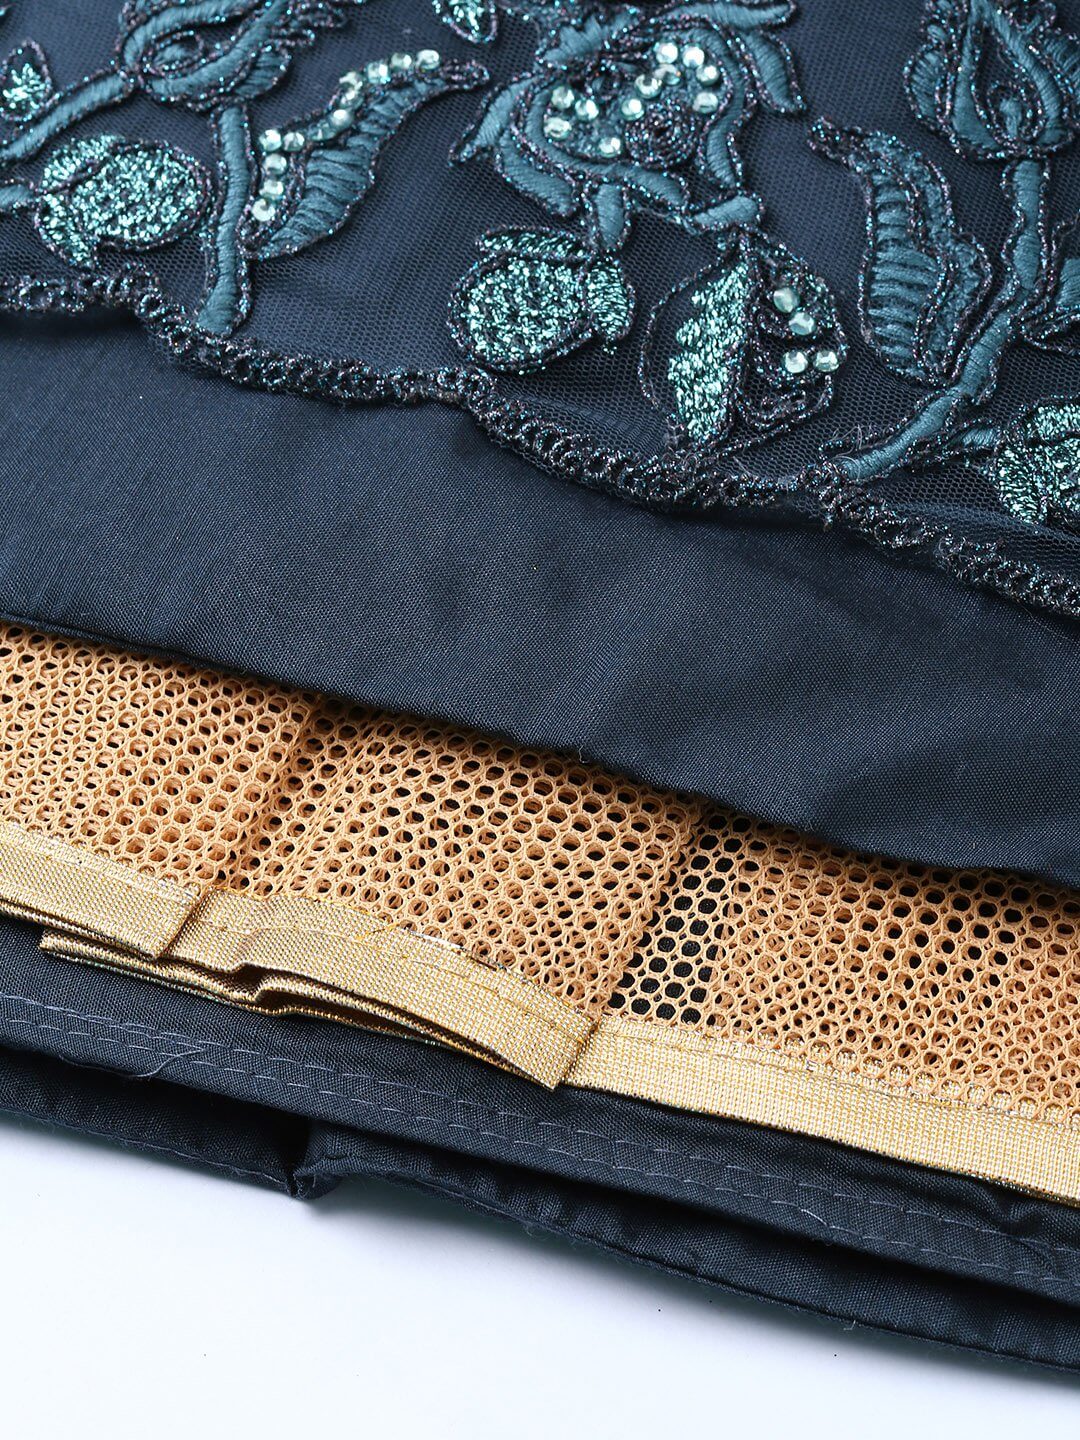 Embroidered Semi-Stitched Lehenga Using Sequins & Coding